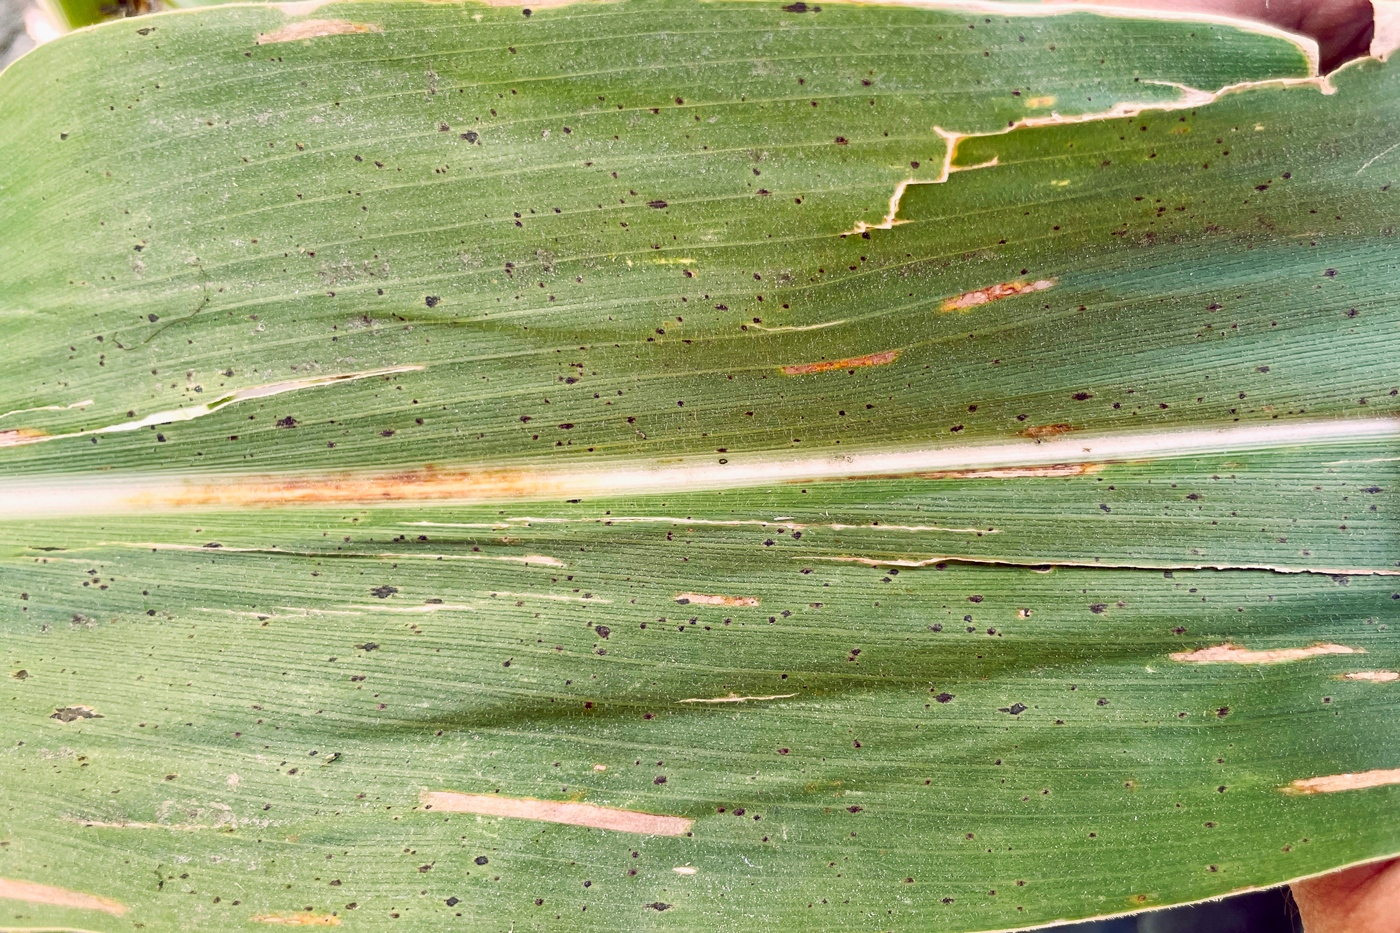 corn leaf with black spots